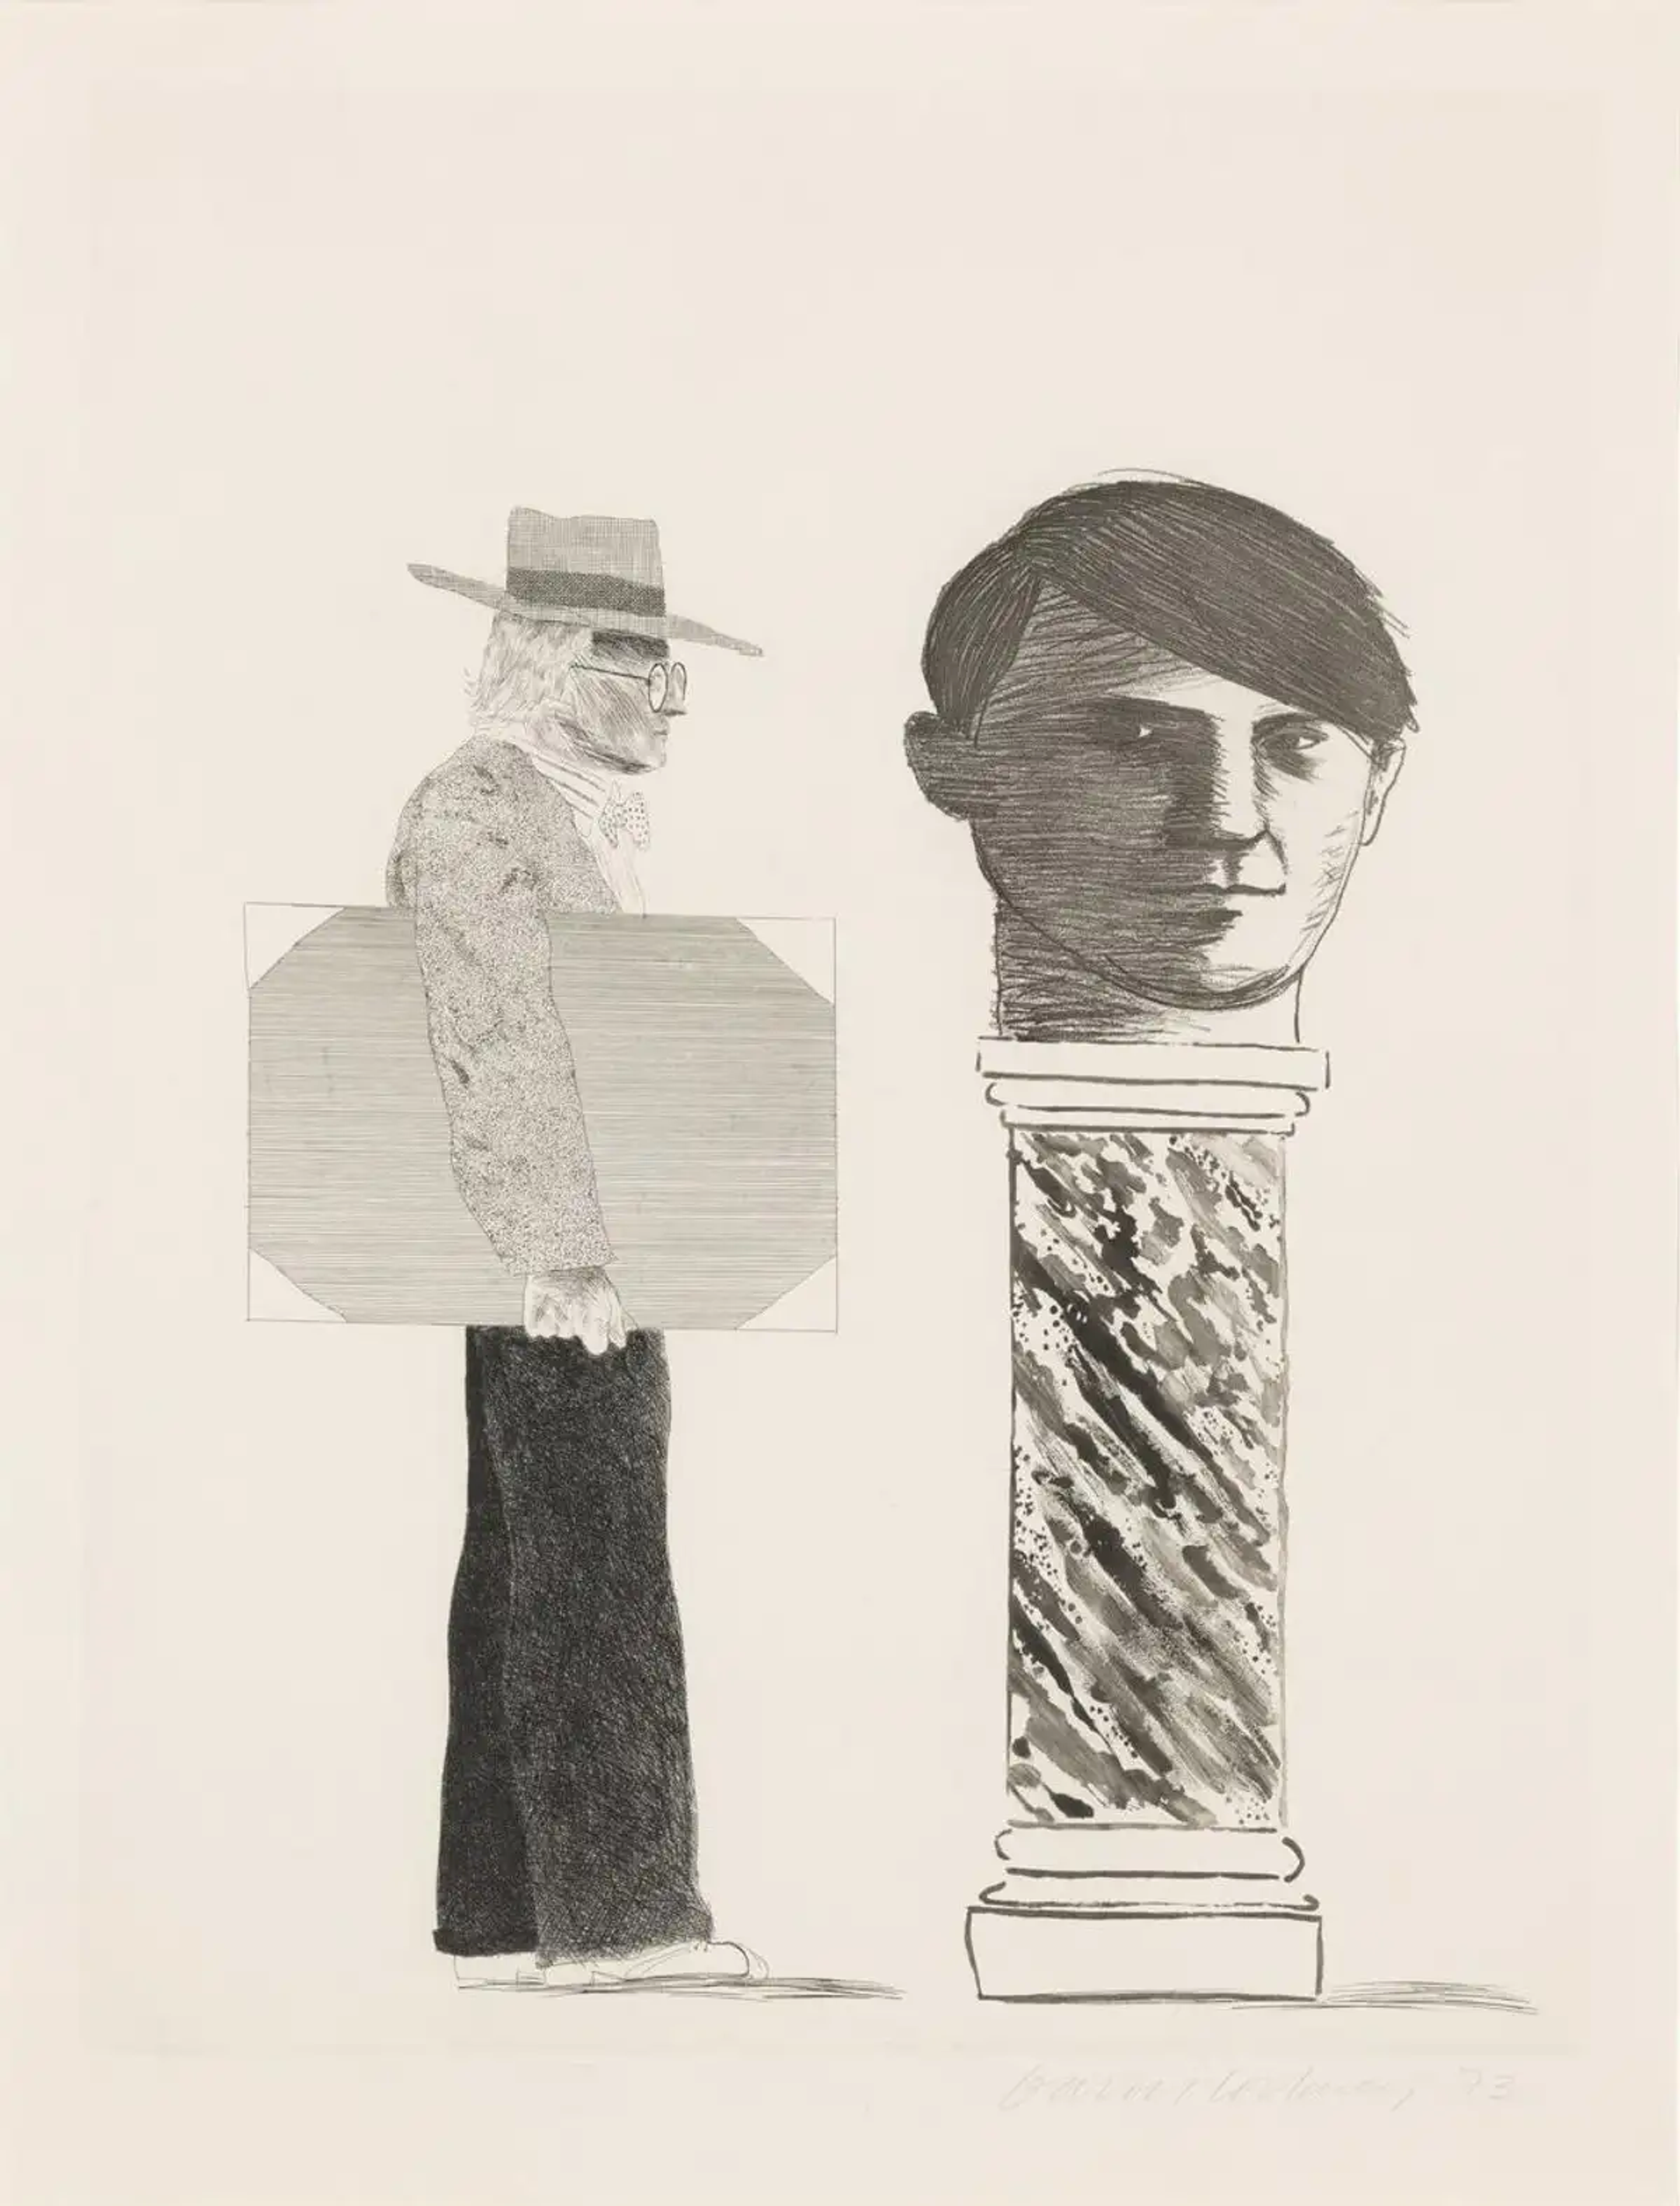 Pablo Picasso and David Hockney